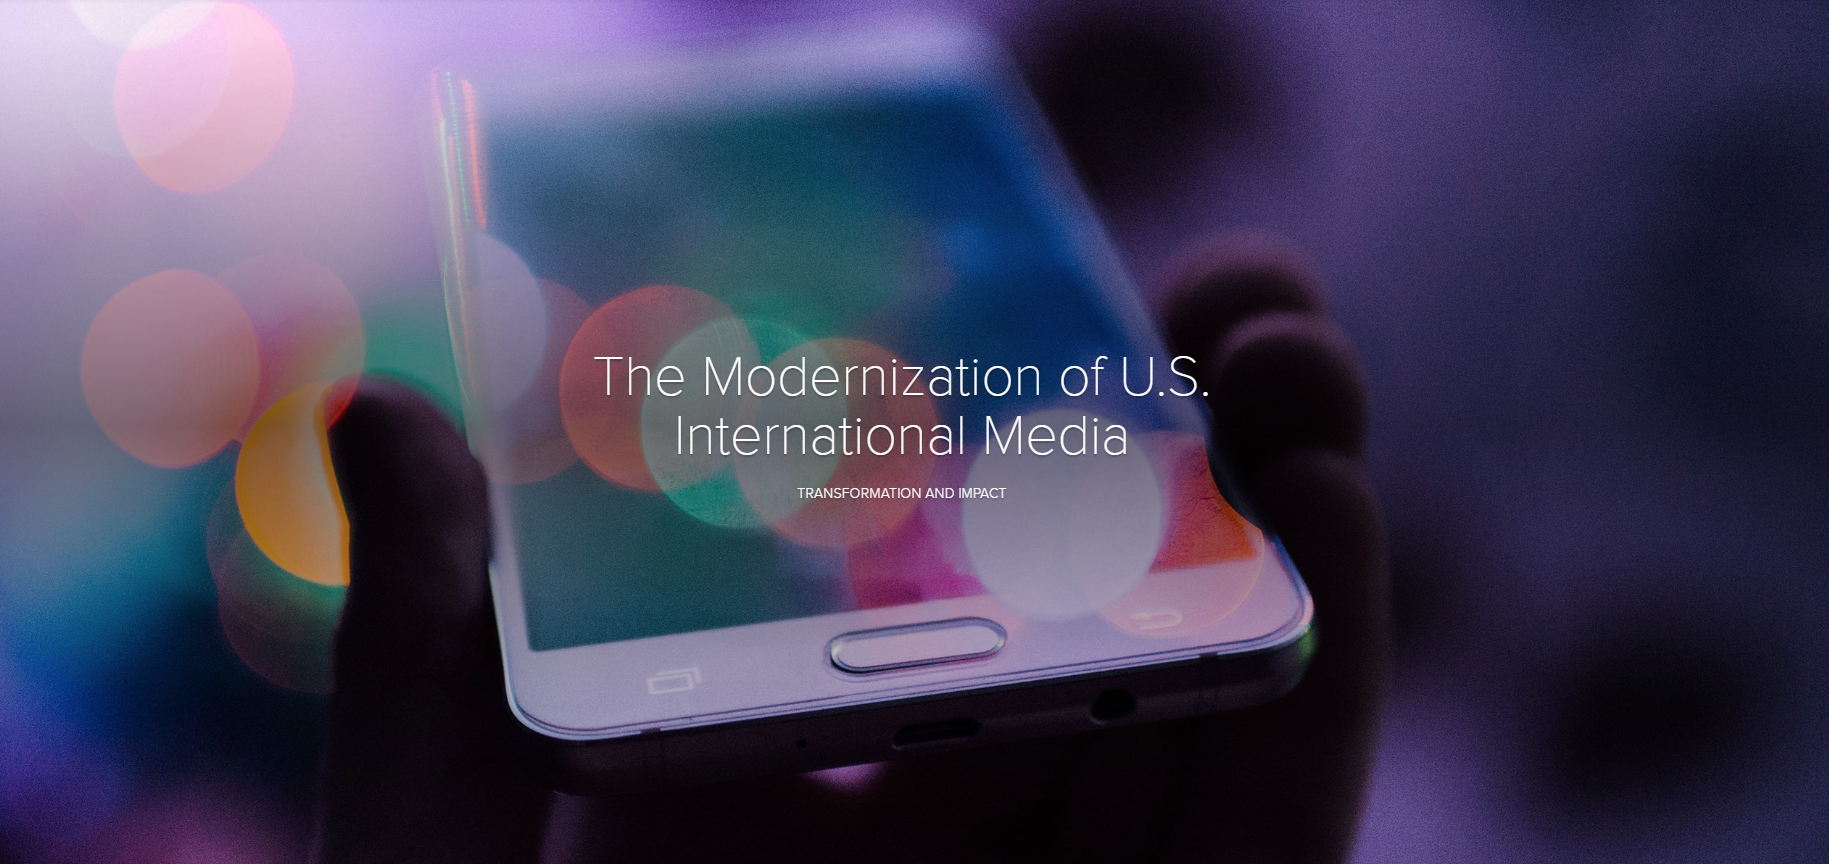 The modernization of U.S. international media